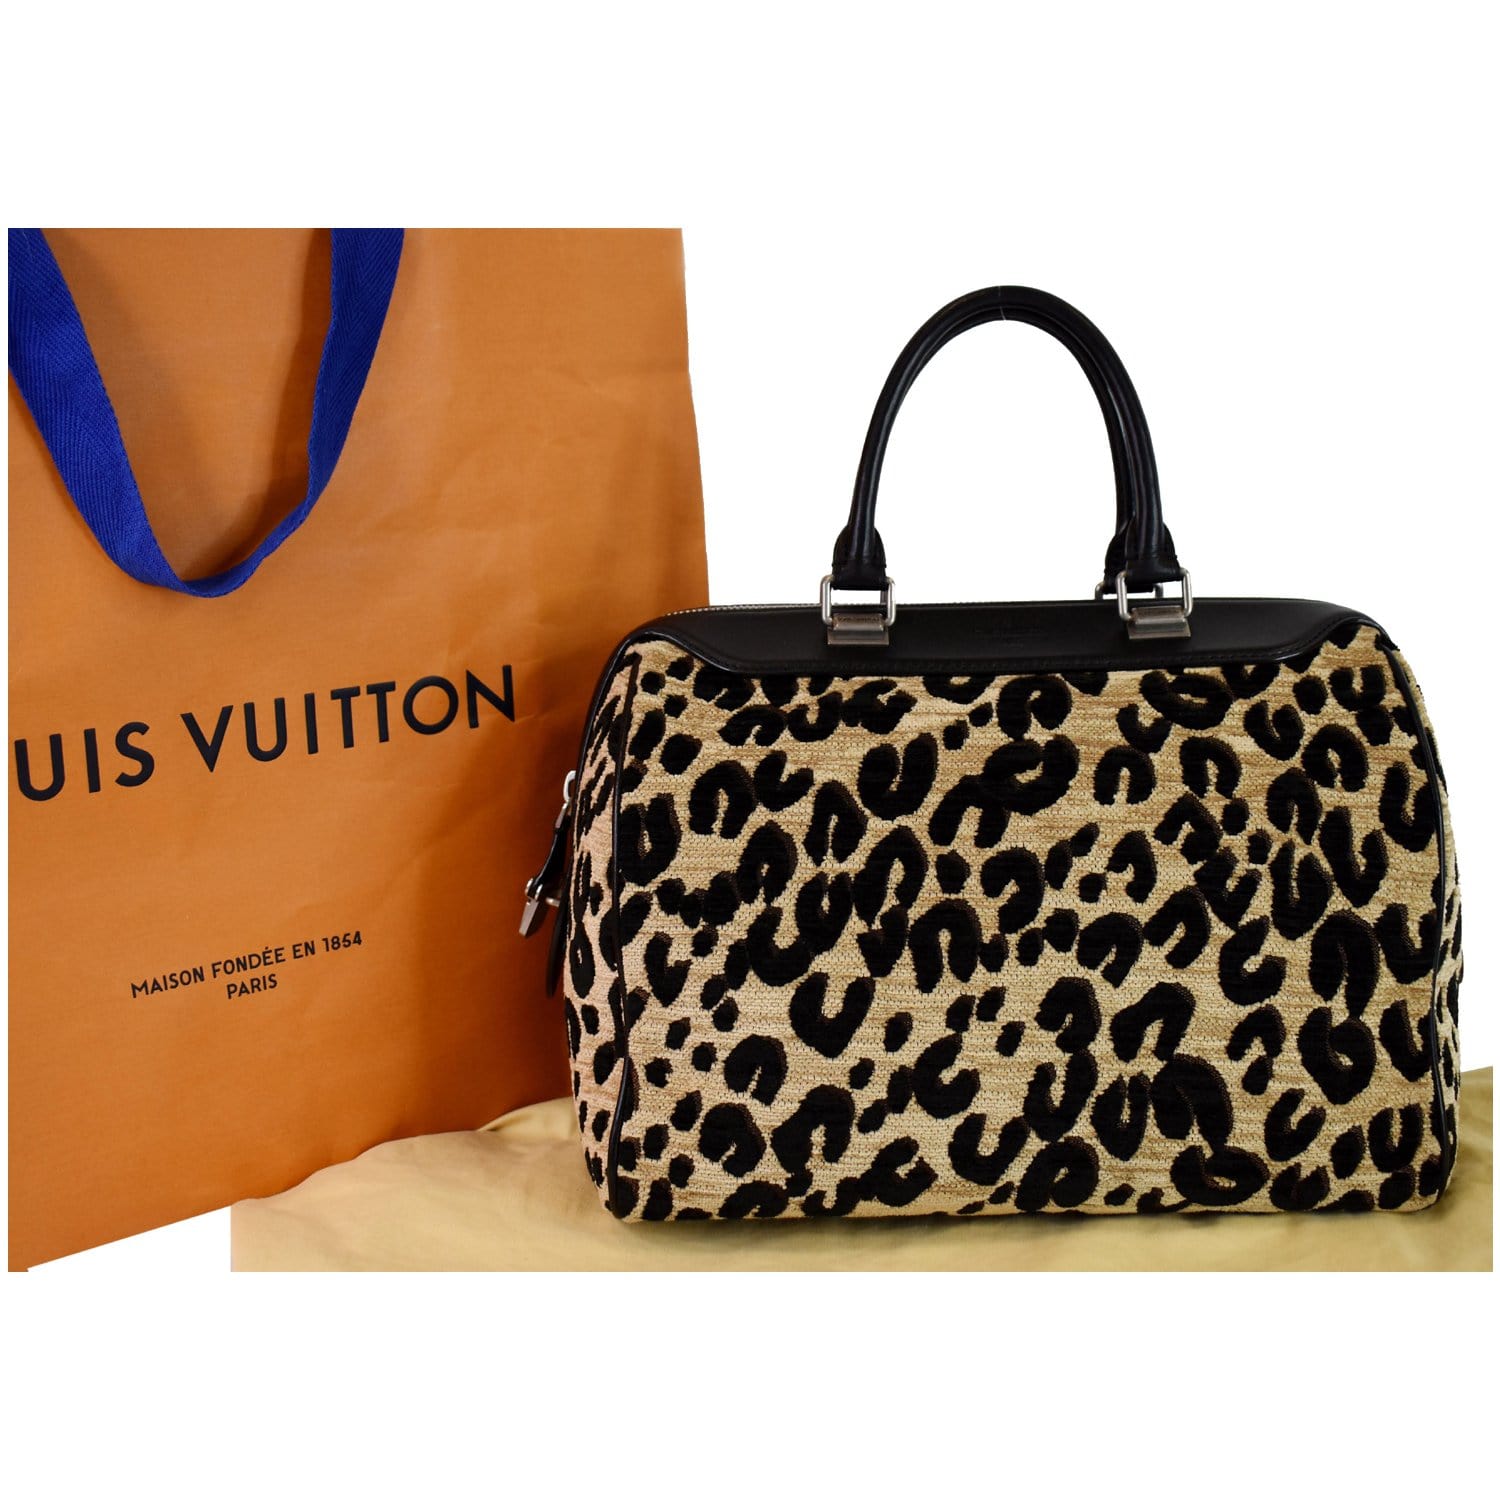 Louis Vuitton Stephen Sprouse Leopard Speedy Auction